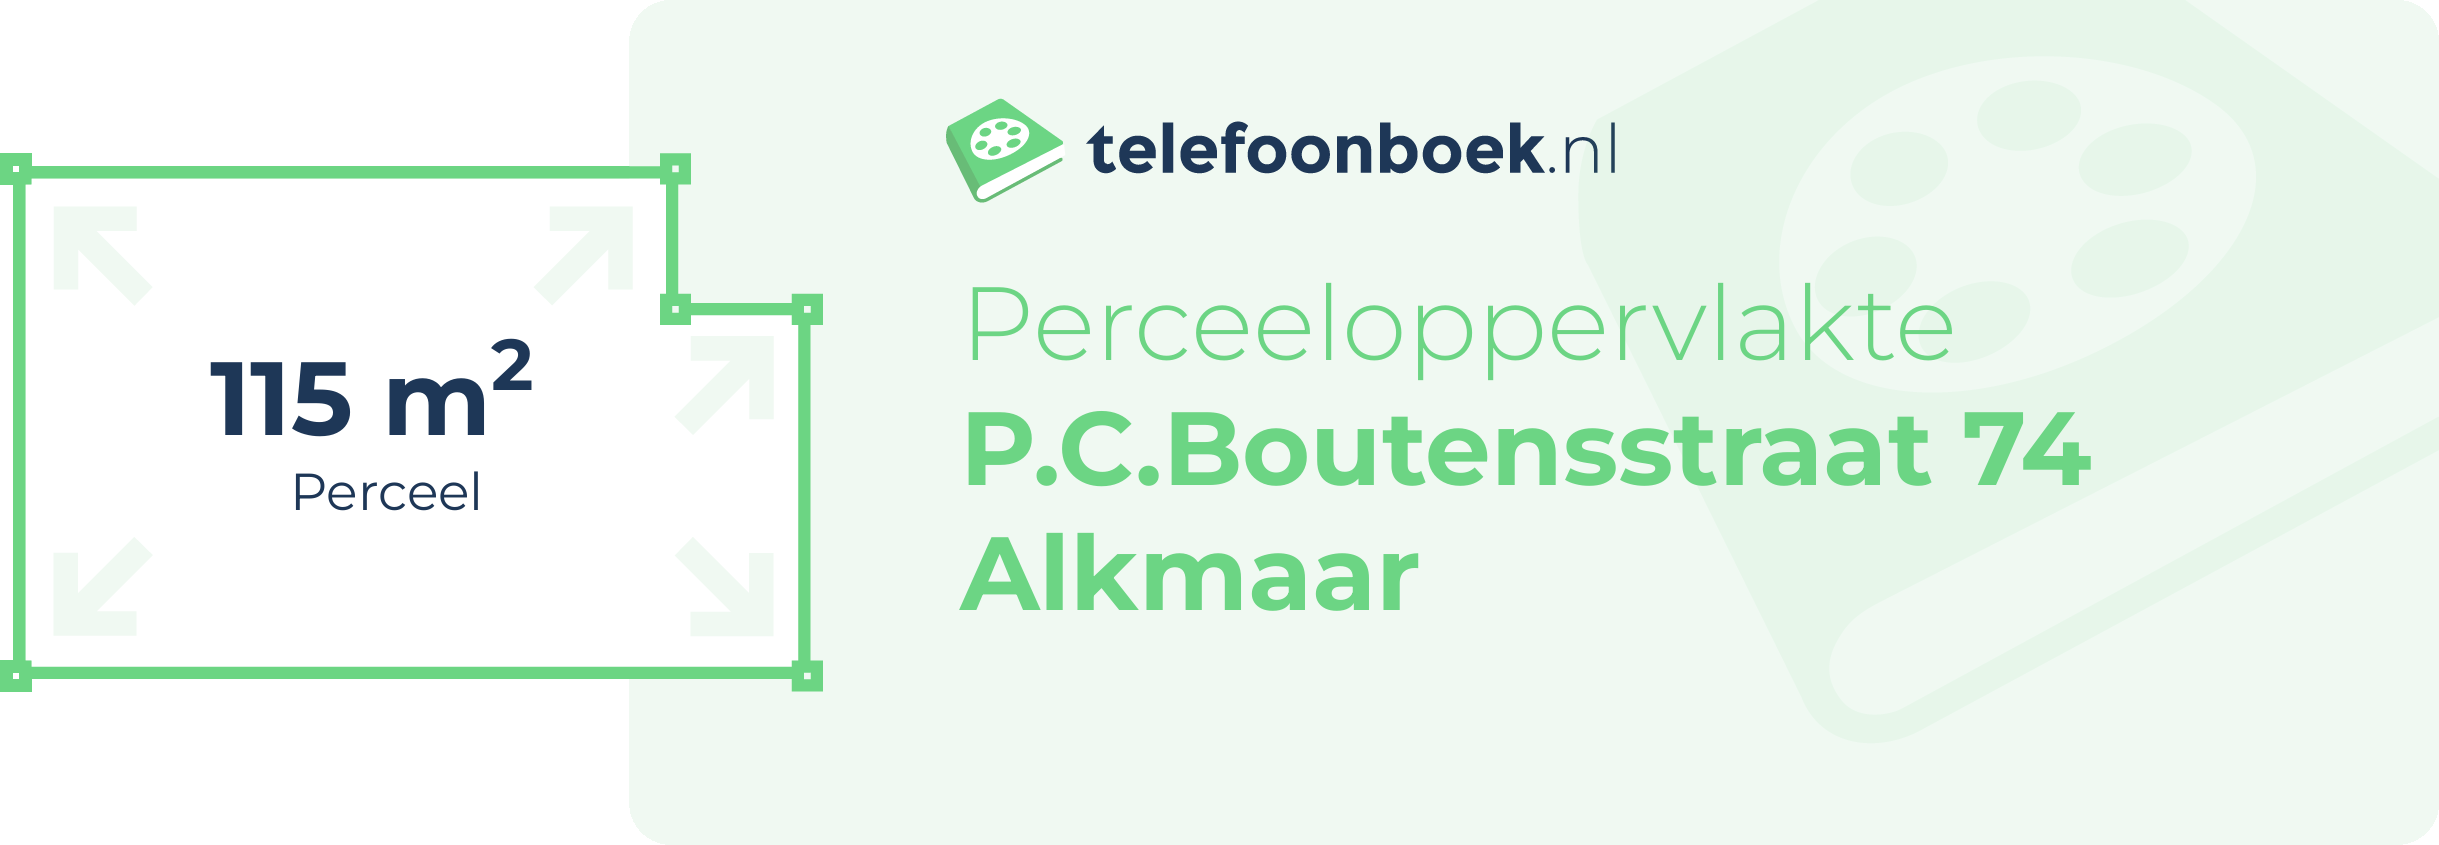 Perceeloppervlakte P.C.Boutensstraat 74 Alkmaar